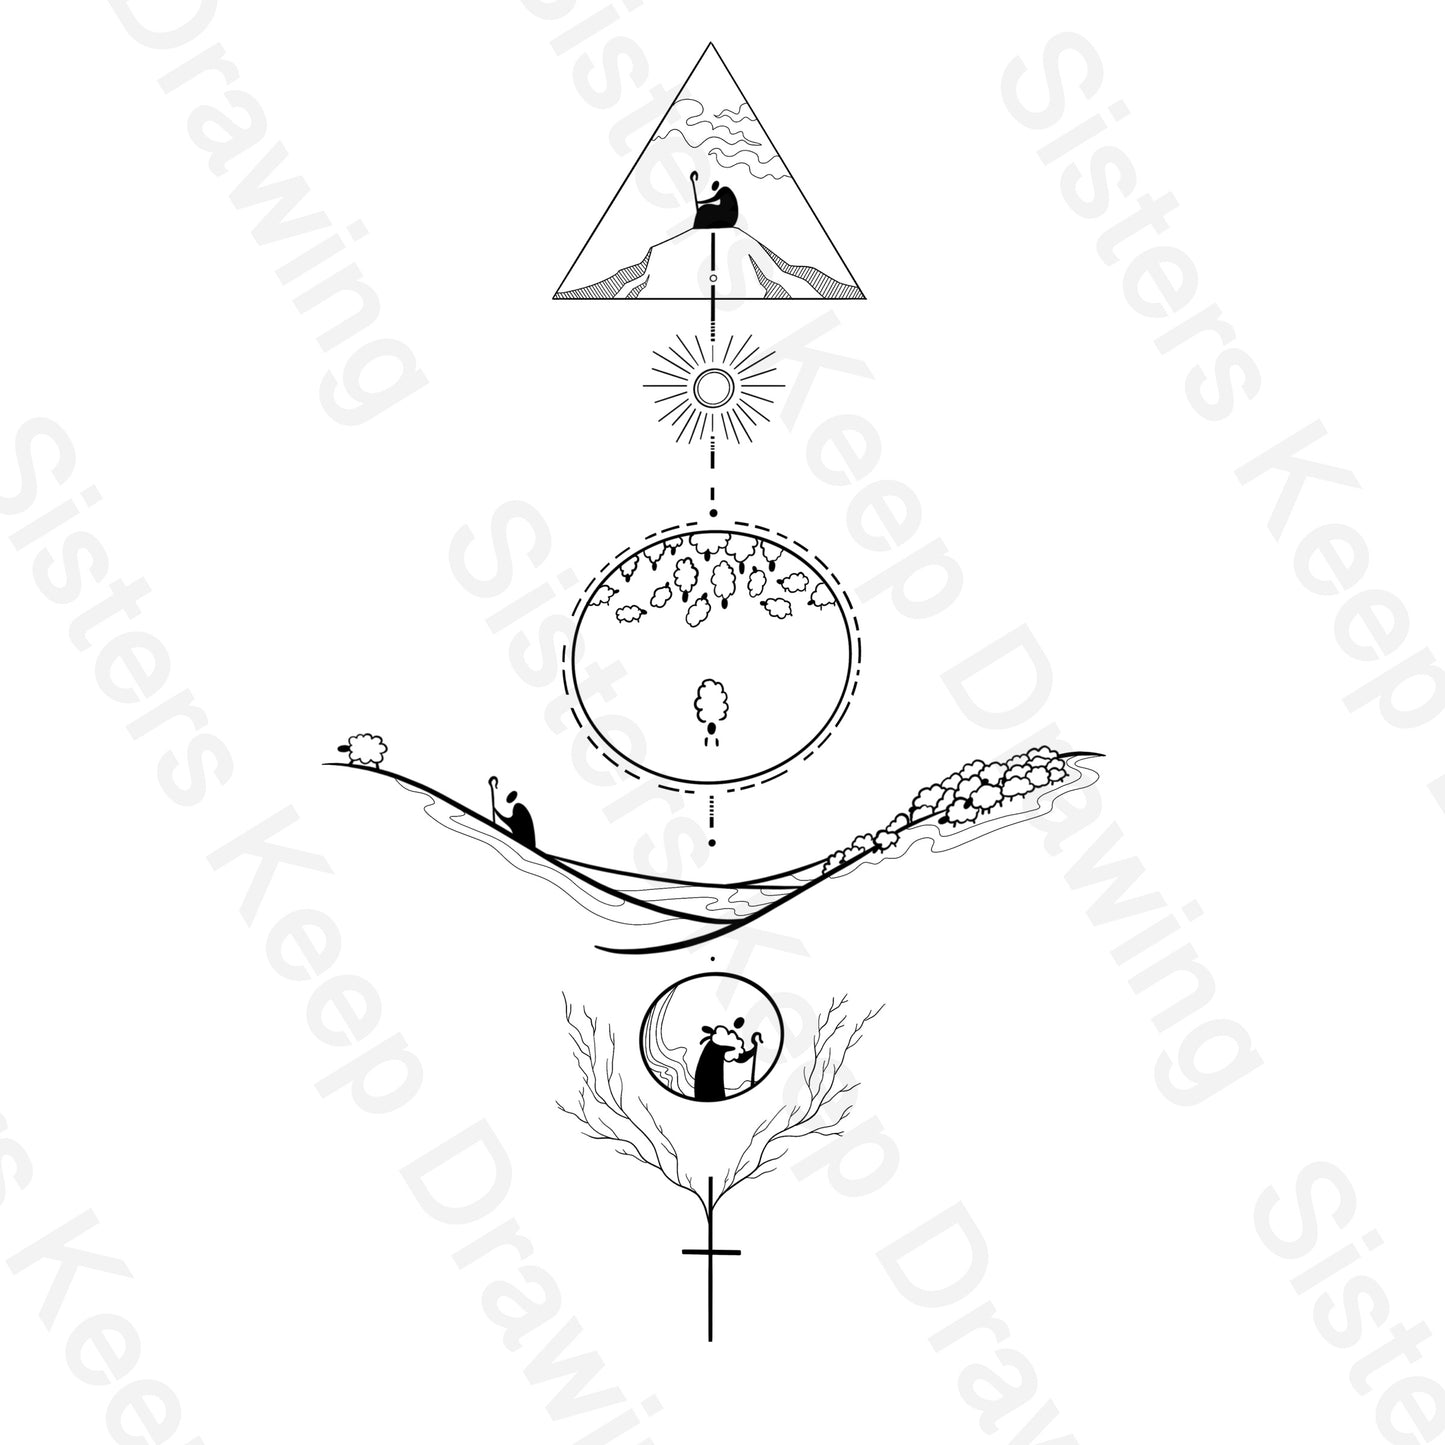 One Lost Sheep Spine-Bible Tattoo Transparent PNG- instant download digital printable artwork